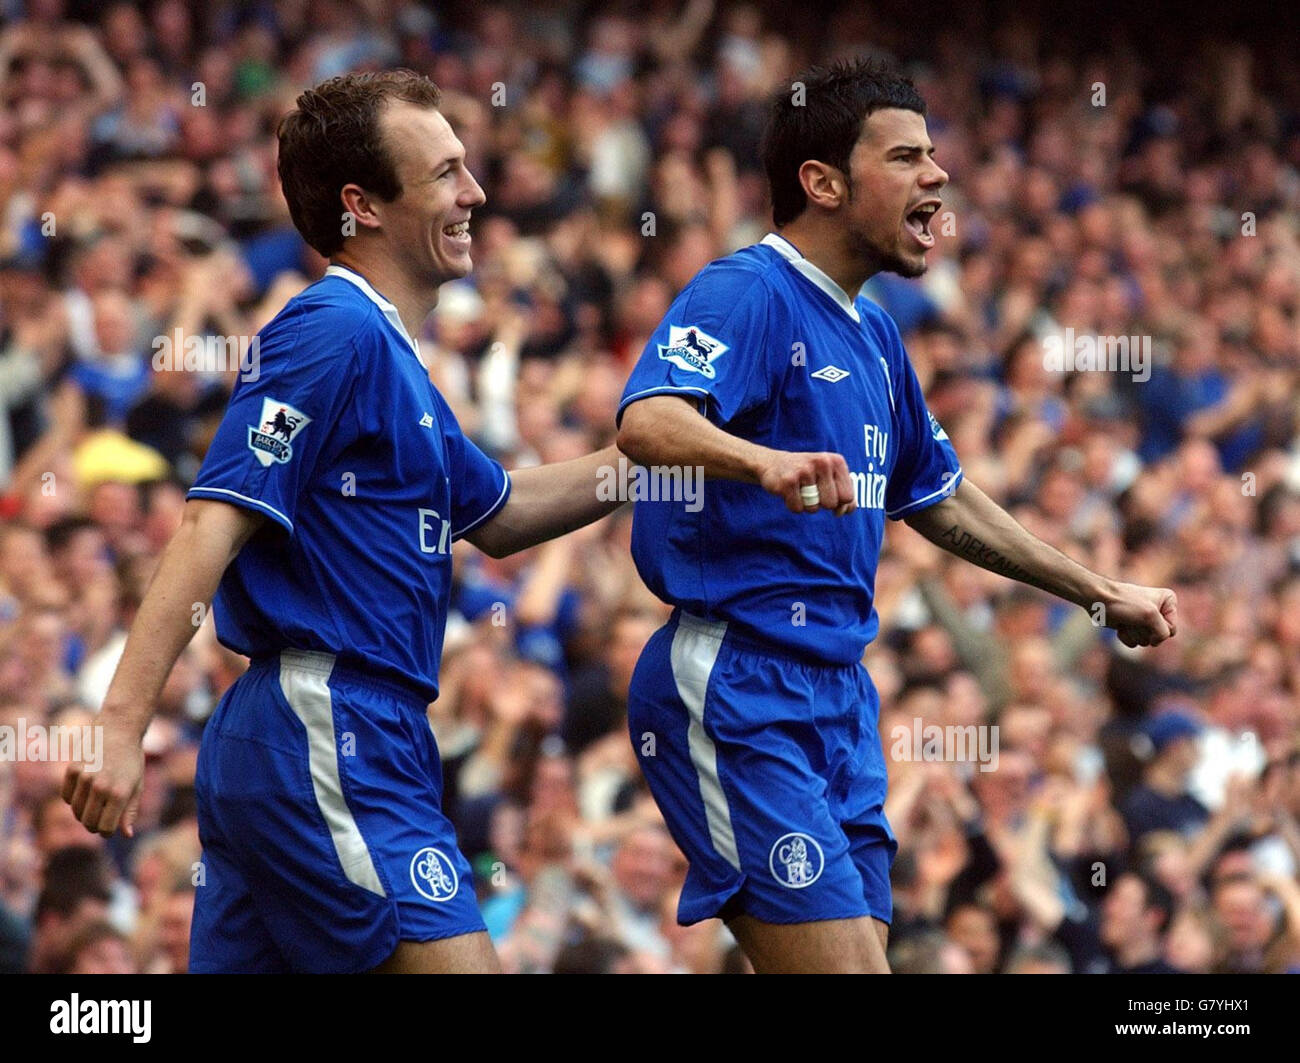 Chelsea's Mateja Kezman (rechts) feiert mit Teamkollege Arjen Robben nach dem Treffer gegen Crystal Palace. Stockfoto